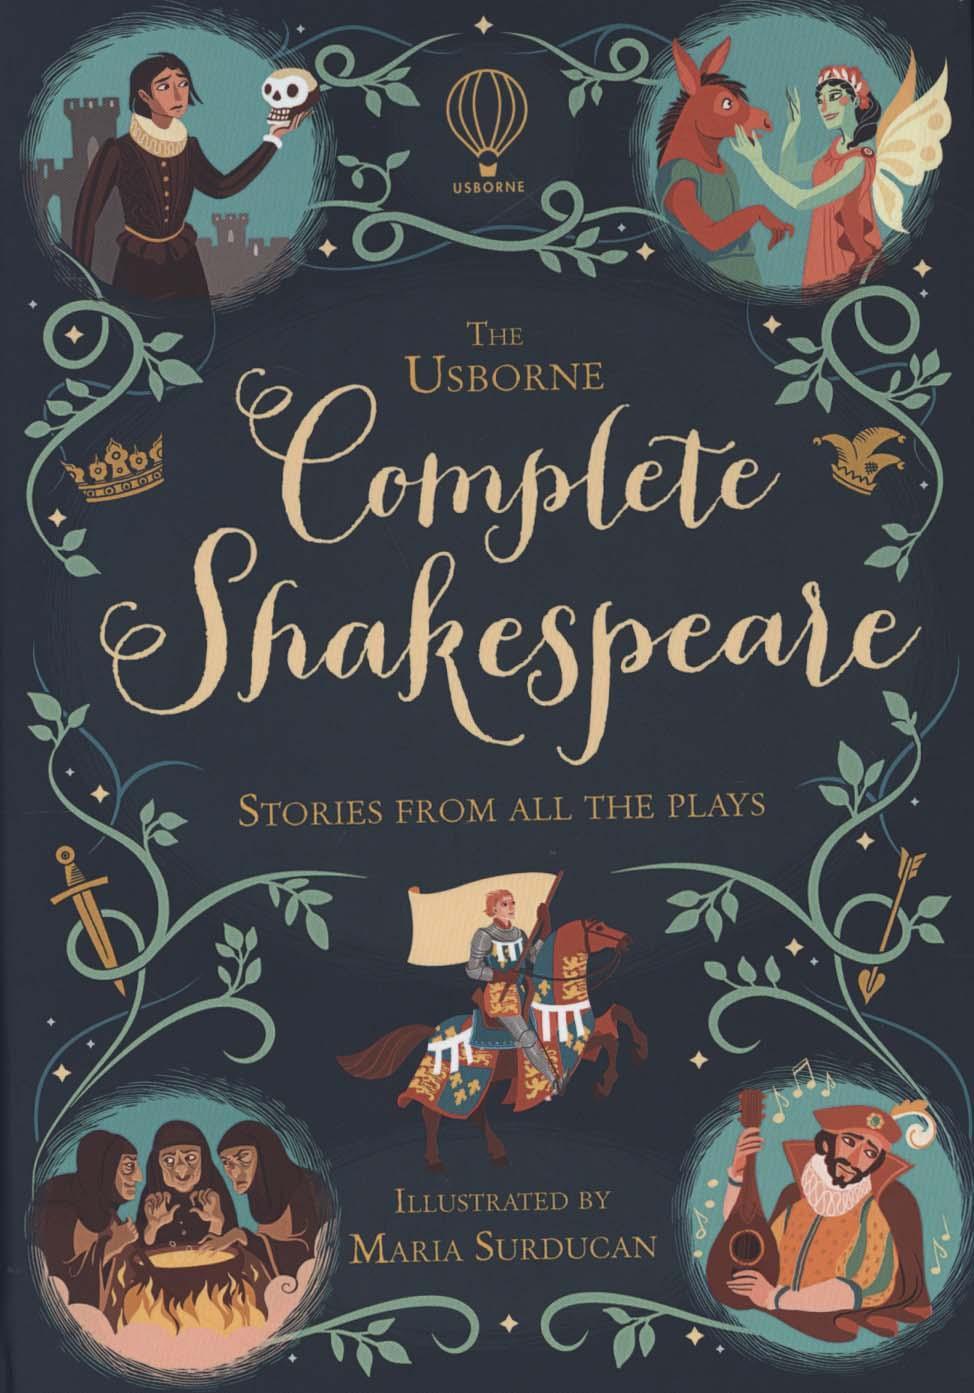 Complete Shakespeare